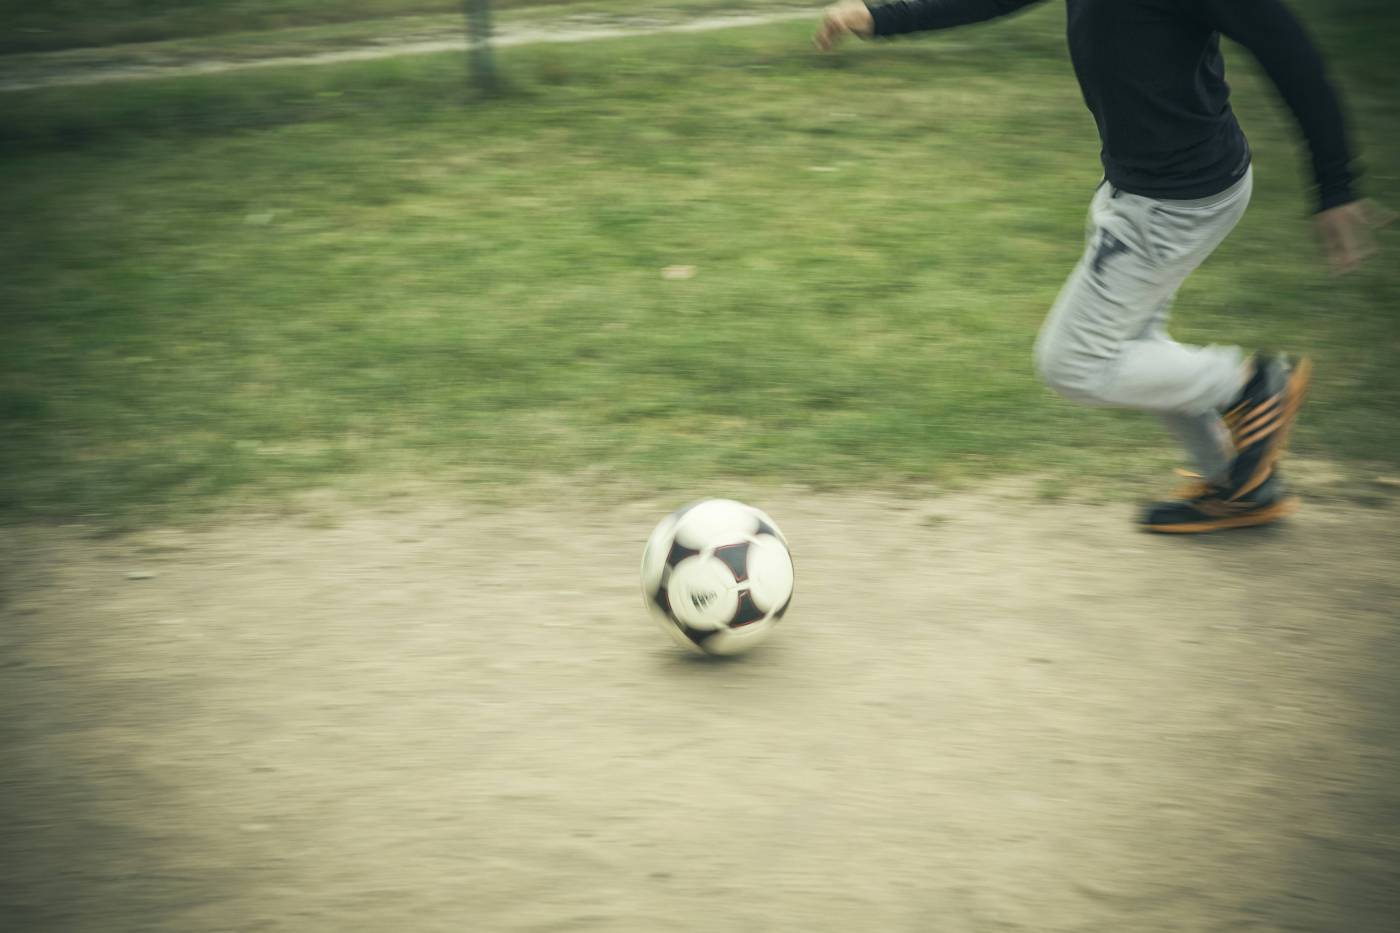 soccer boy shoot goal/ picture